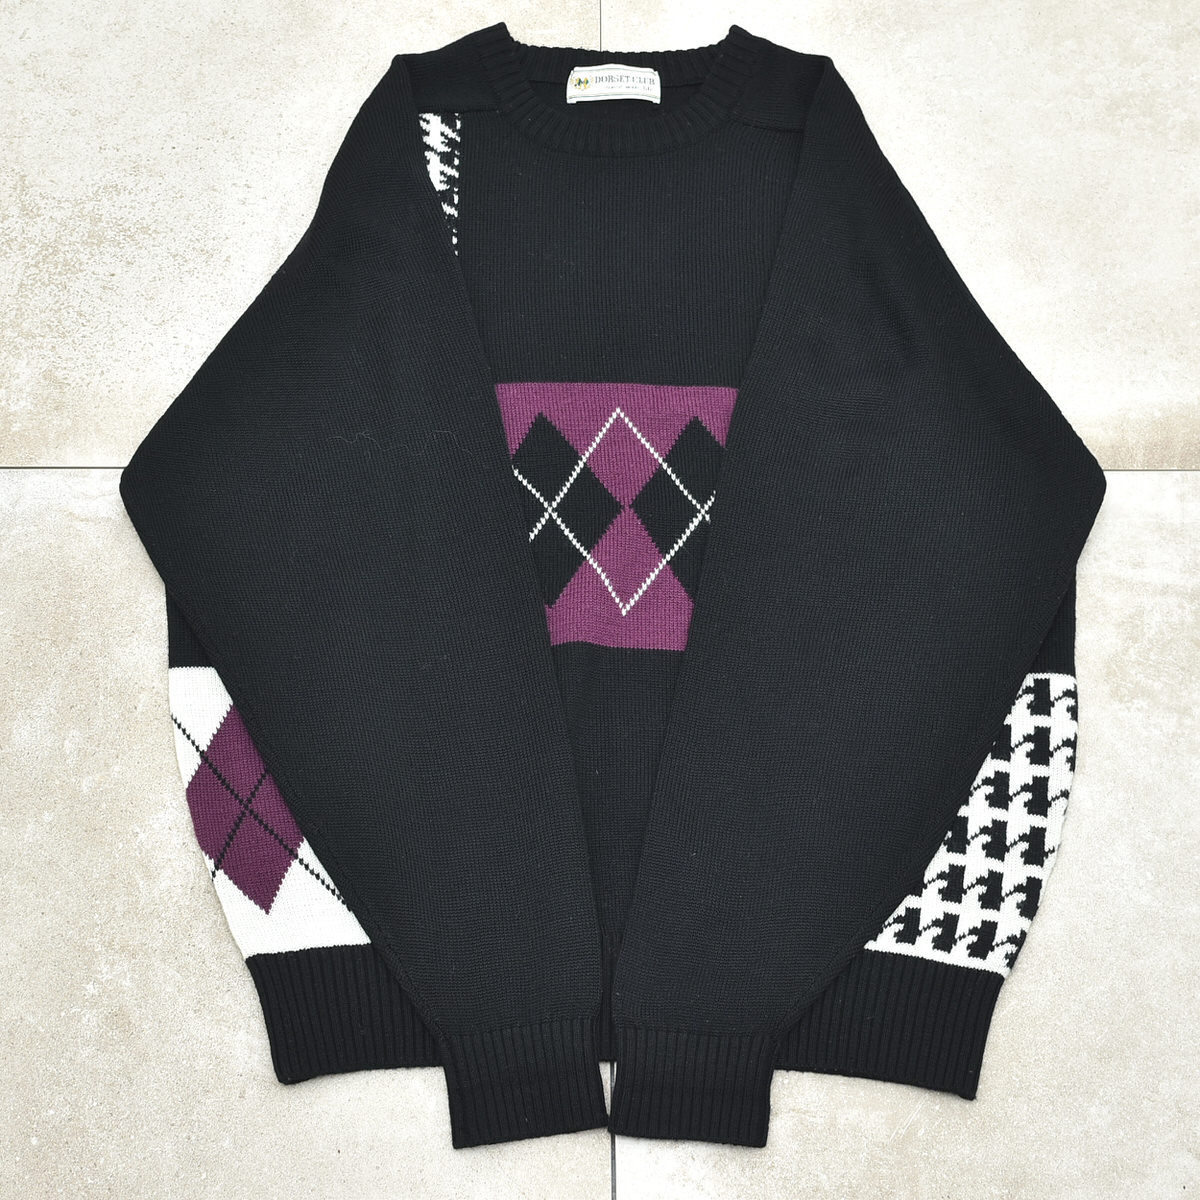 Argyle & Dogstooth panel design sweater мужской LL размер a-ga il & тысяч птица .. panel образец высокий мера 